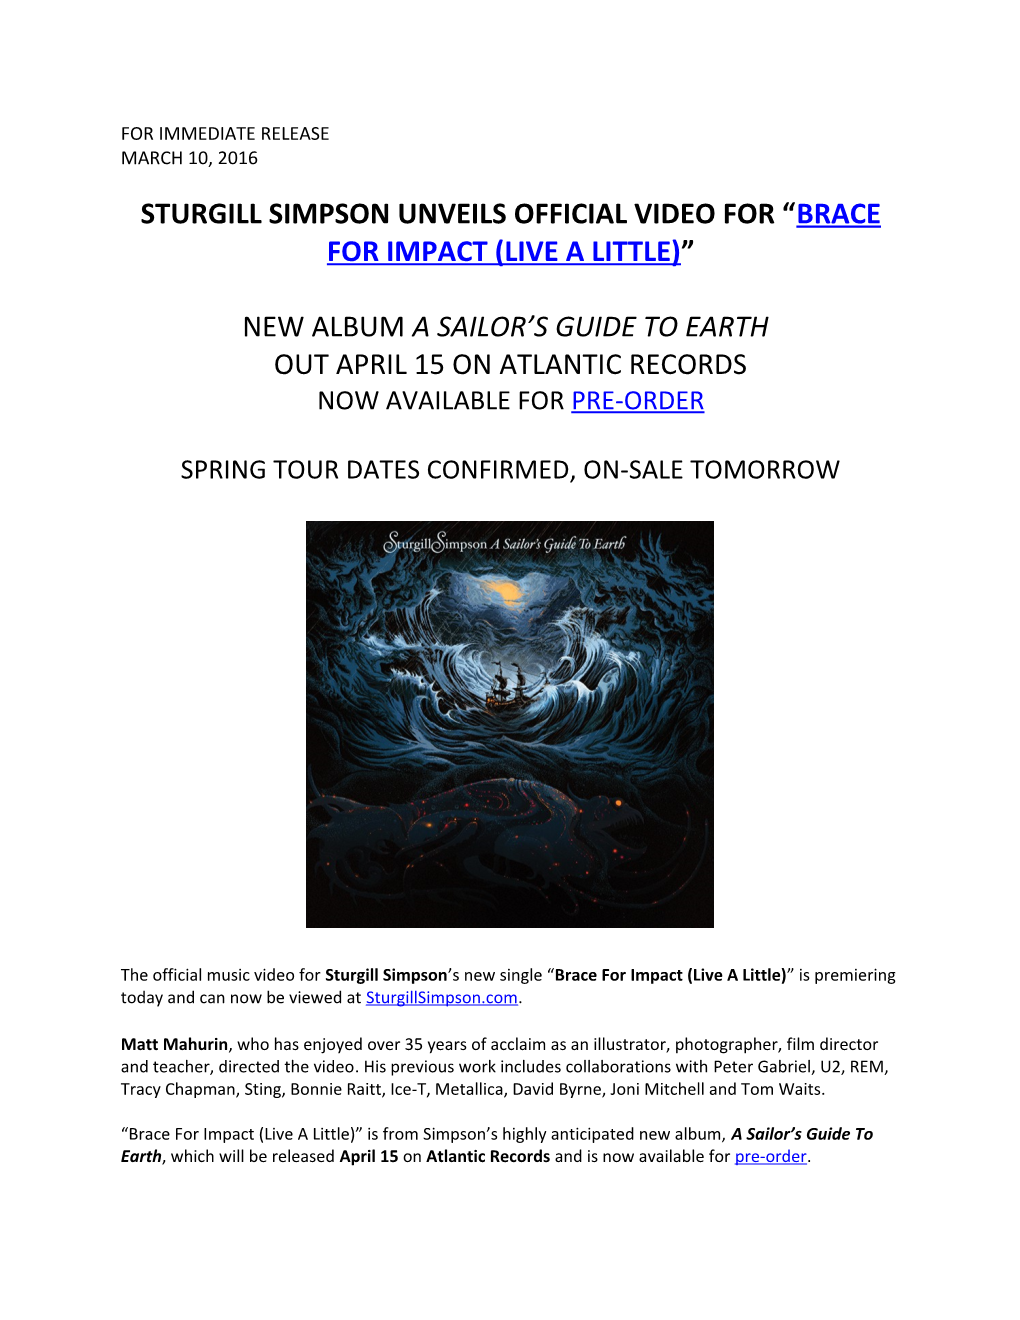 Sturgill Simpson Unveils Official Video for Brace for Impact (Live a Little)